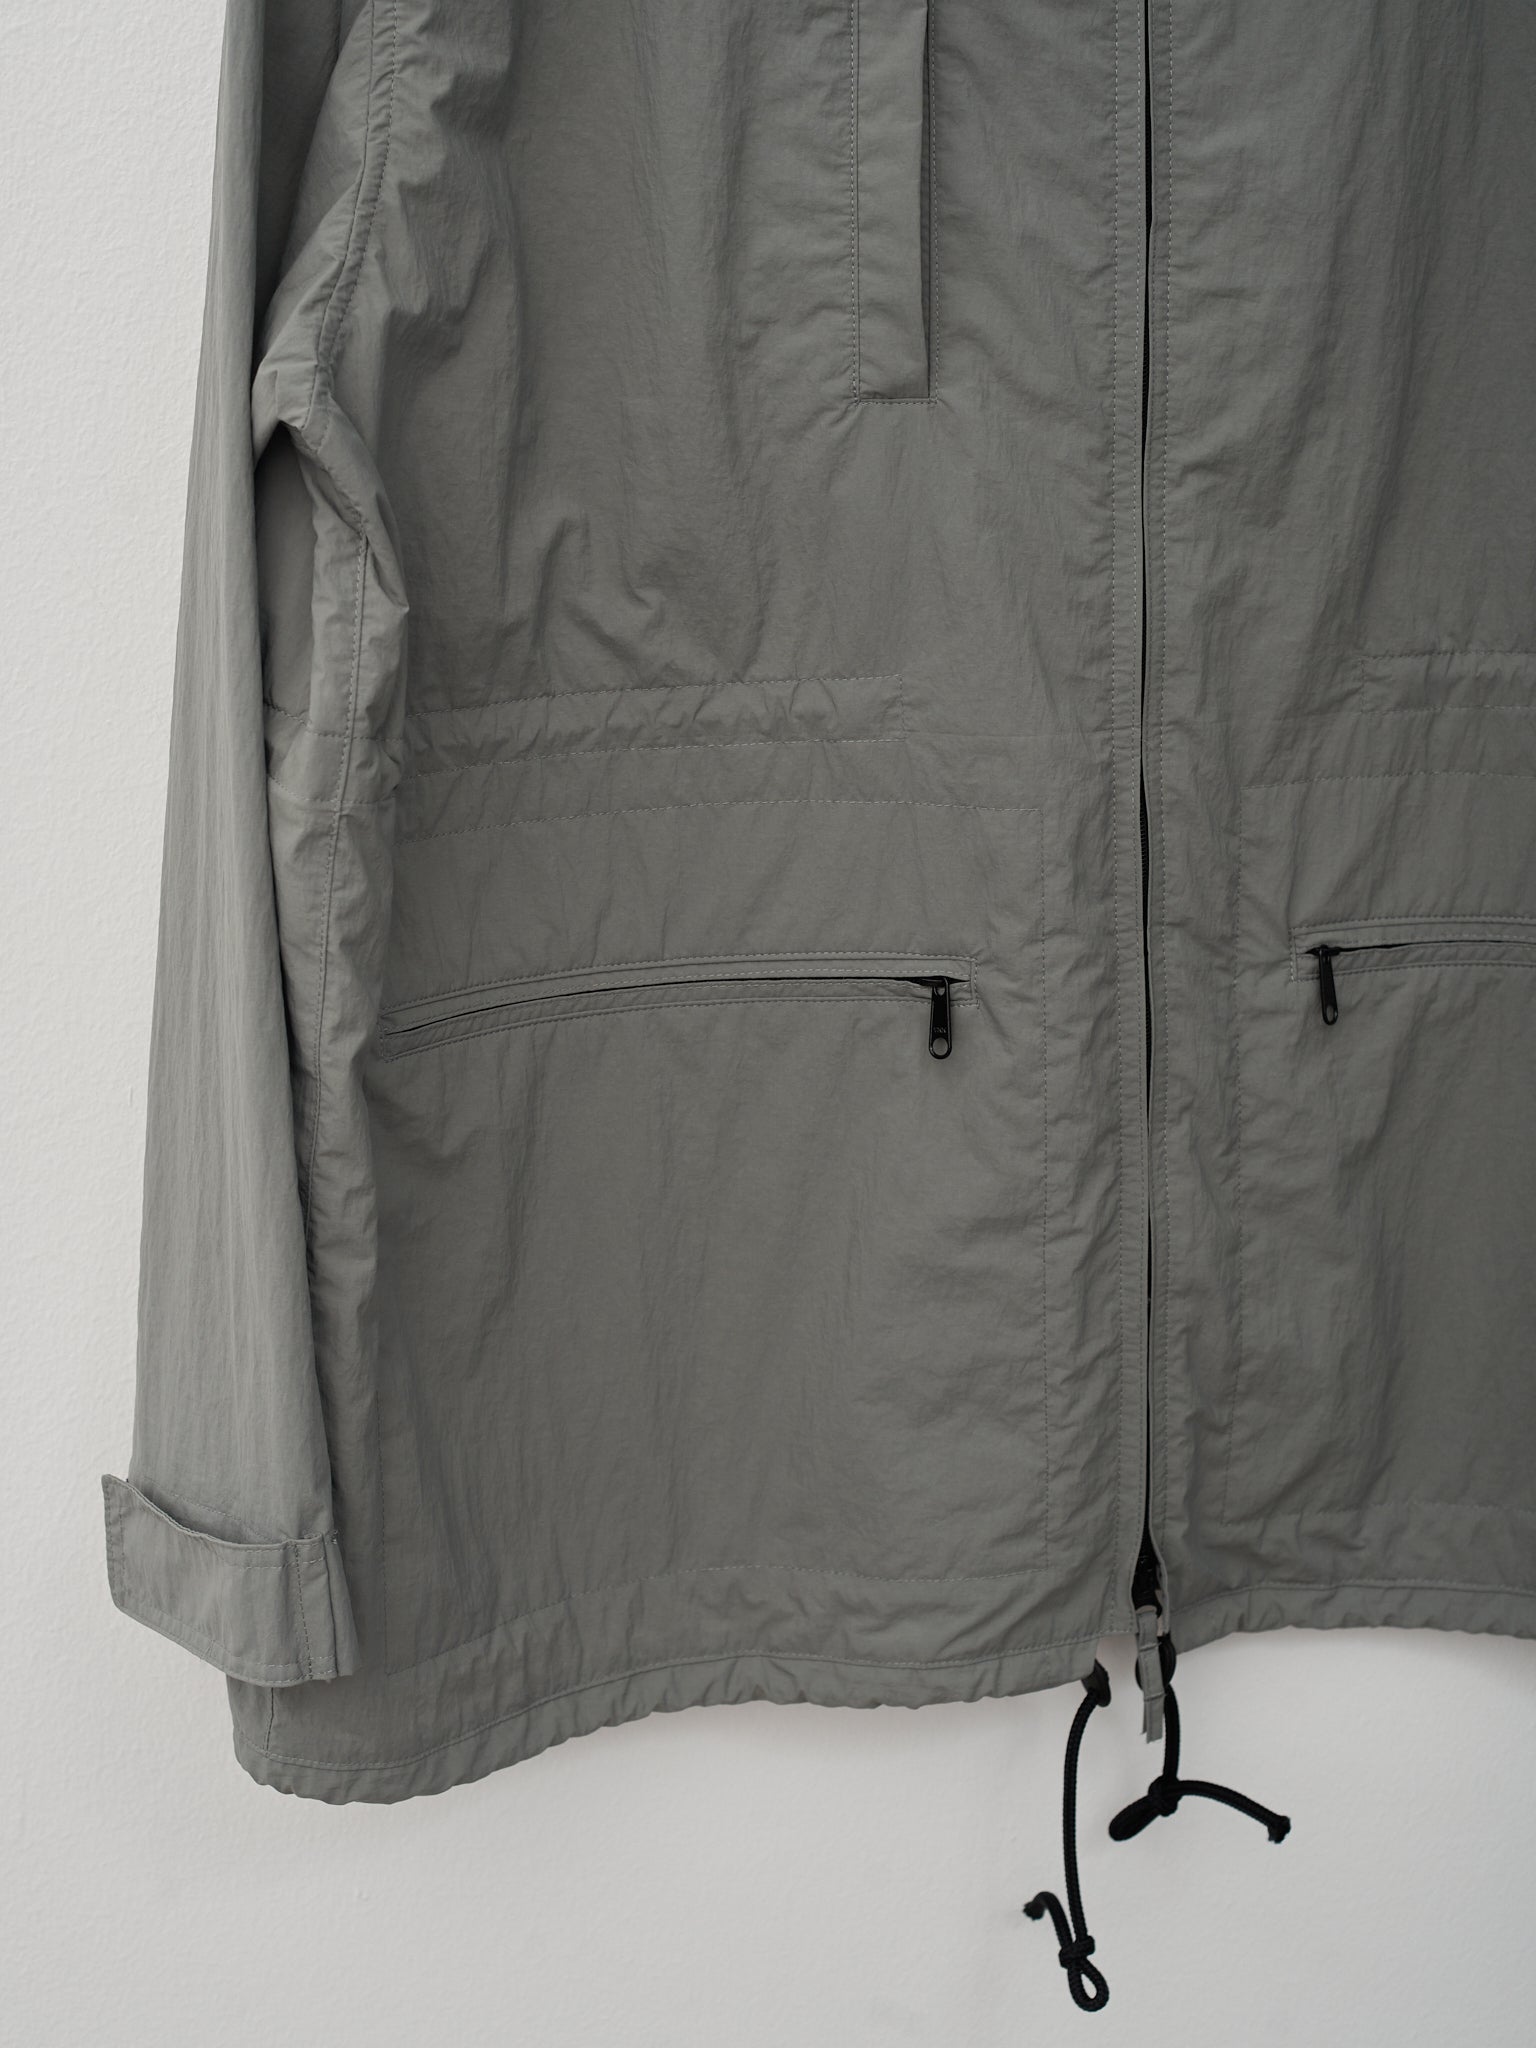 Namu Shop - Aton Travel Nylon Packable Jacket - Green